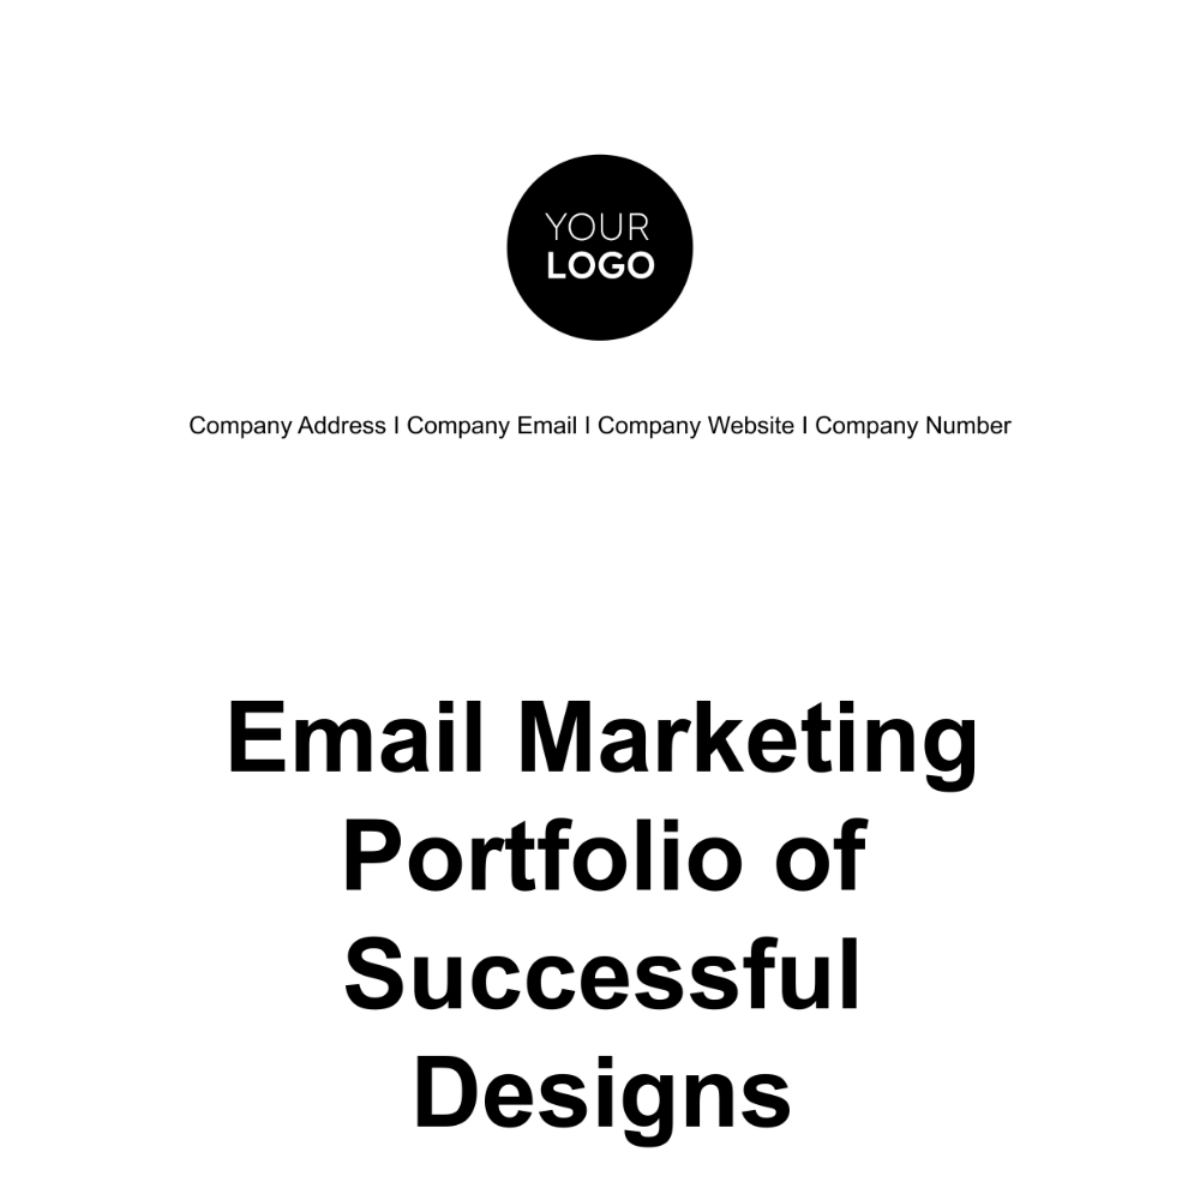 Free Email Marketing Portfolio of Successful Designs Template